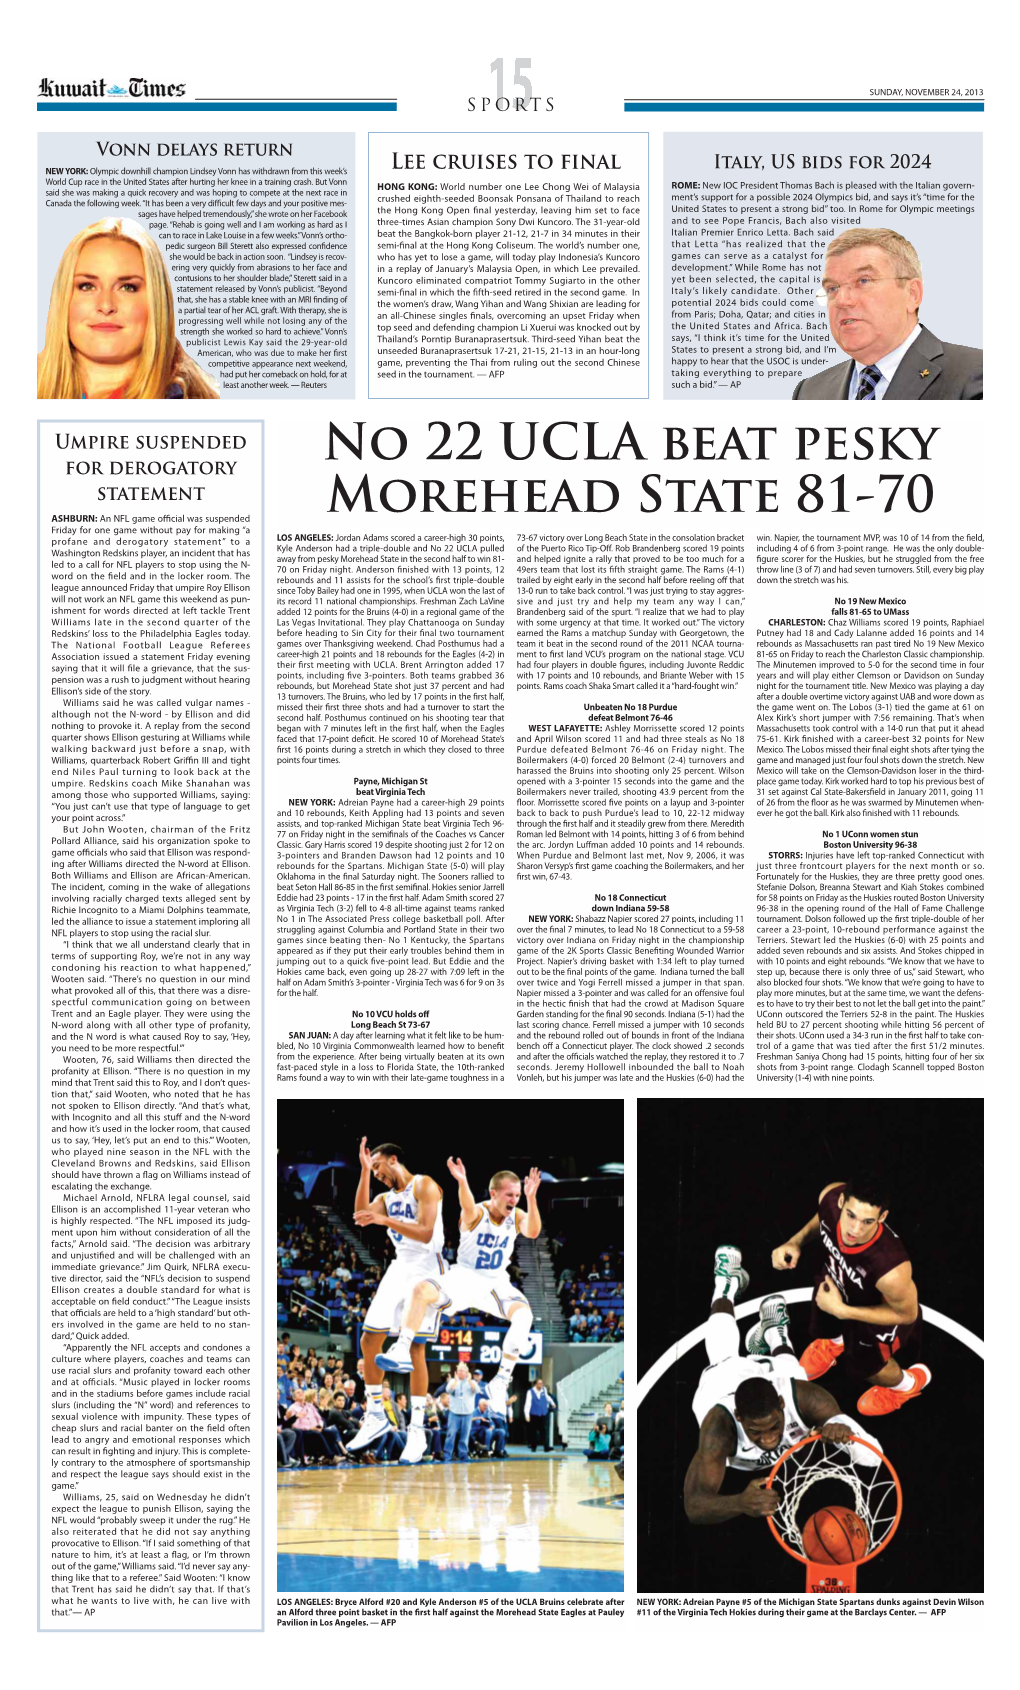 No 22 UCLA Beat Pesky Morehead State 81-70